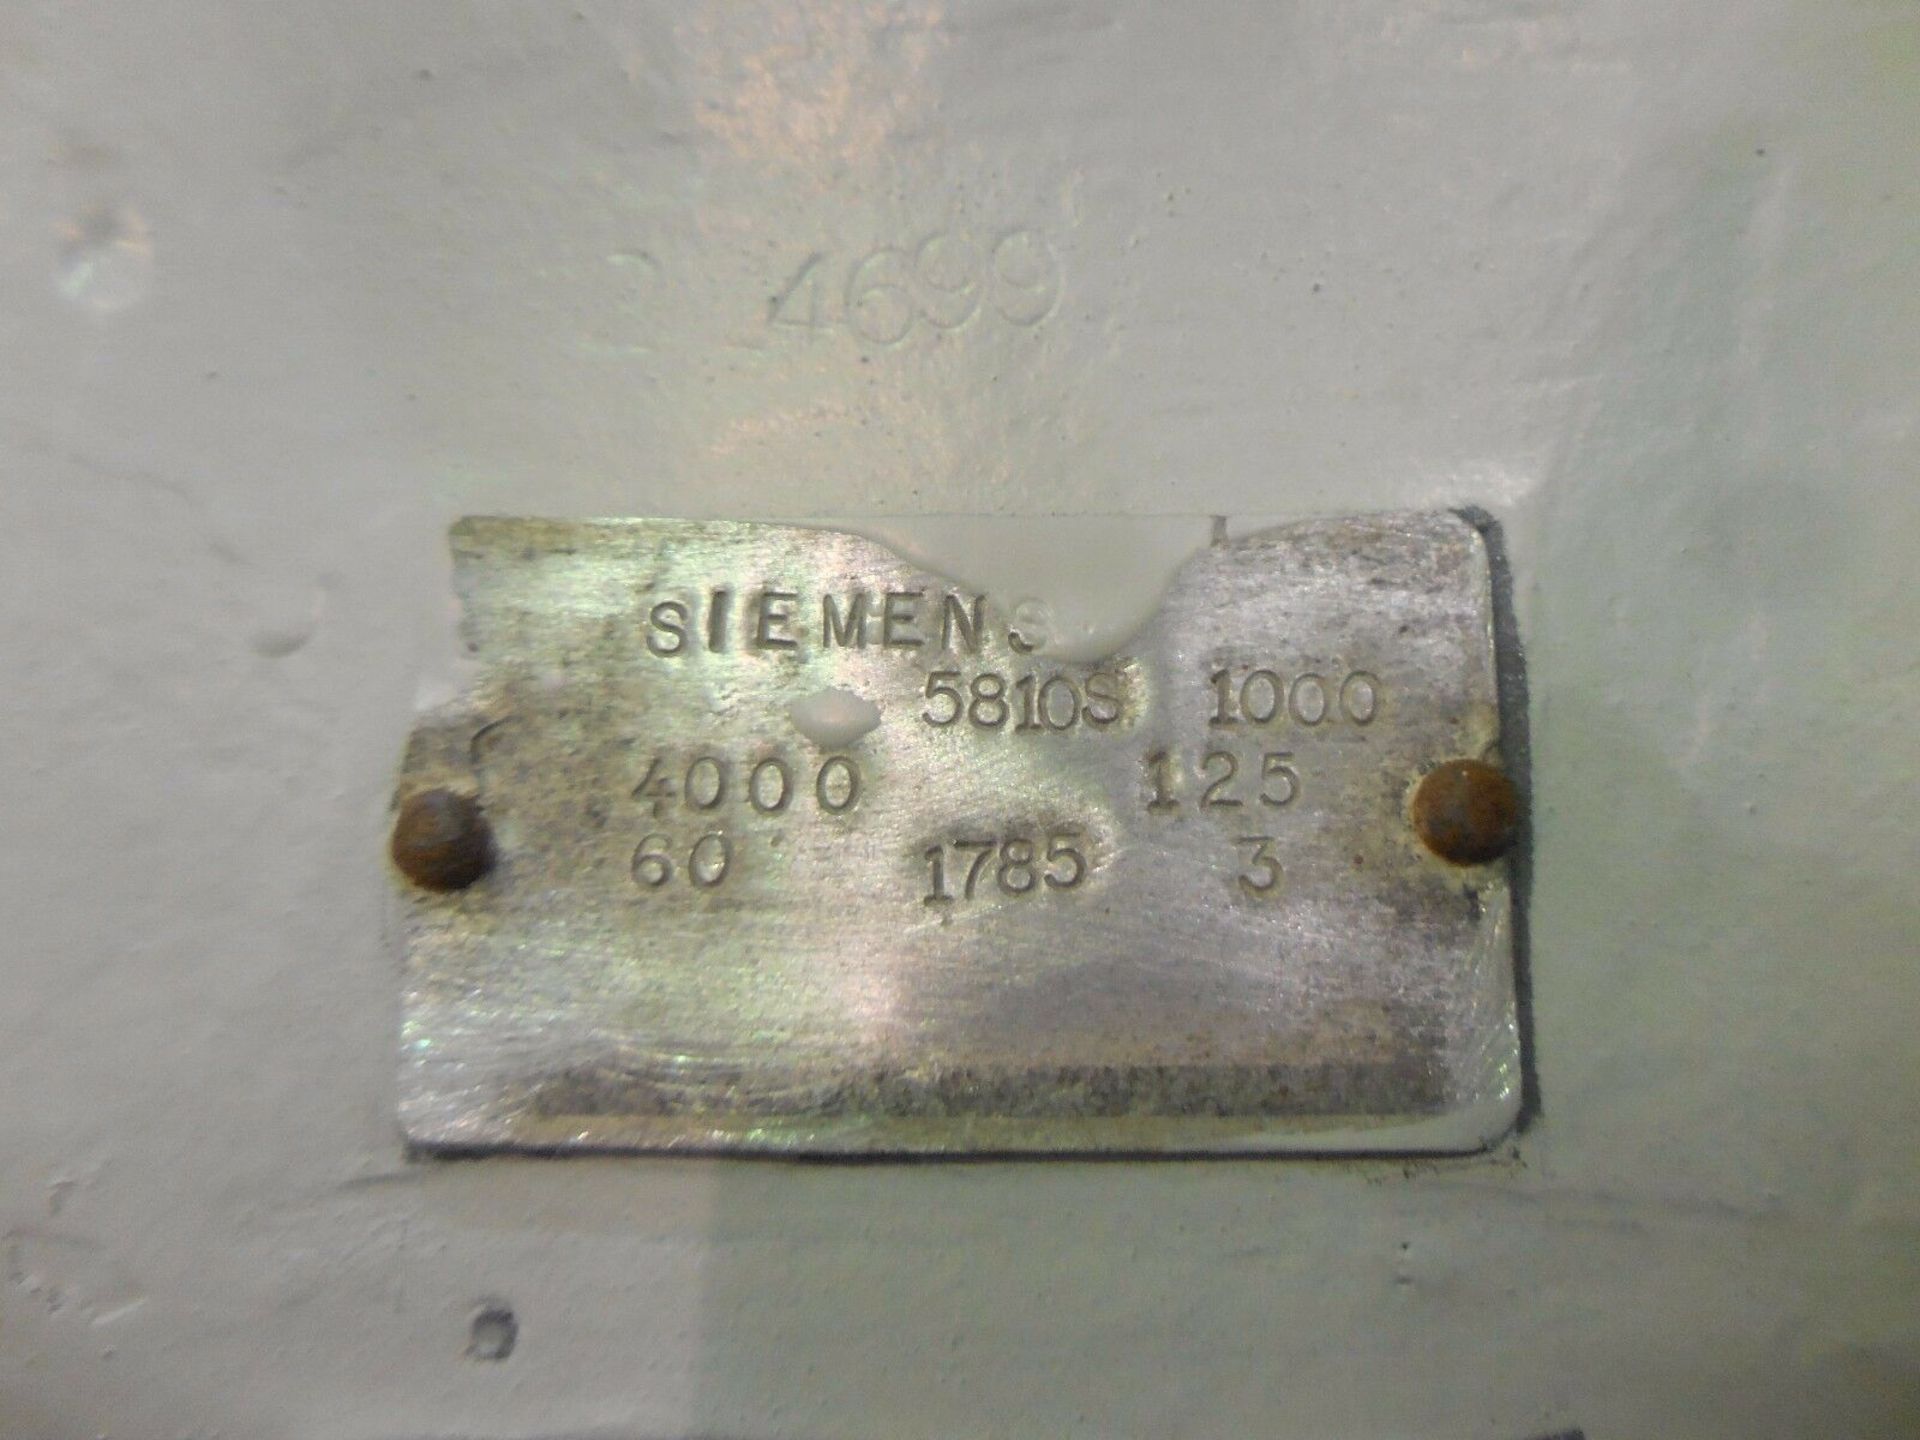 Siemens 1000 HP Electric Motor. 4000 V. 5810S. 1785 RPM. 3 Ph. 60 Hz. - Image 4 of 4